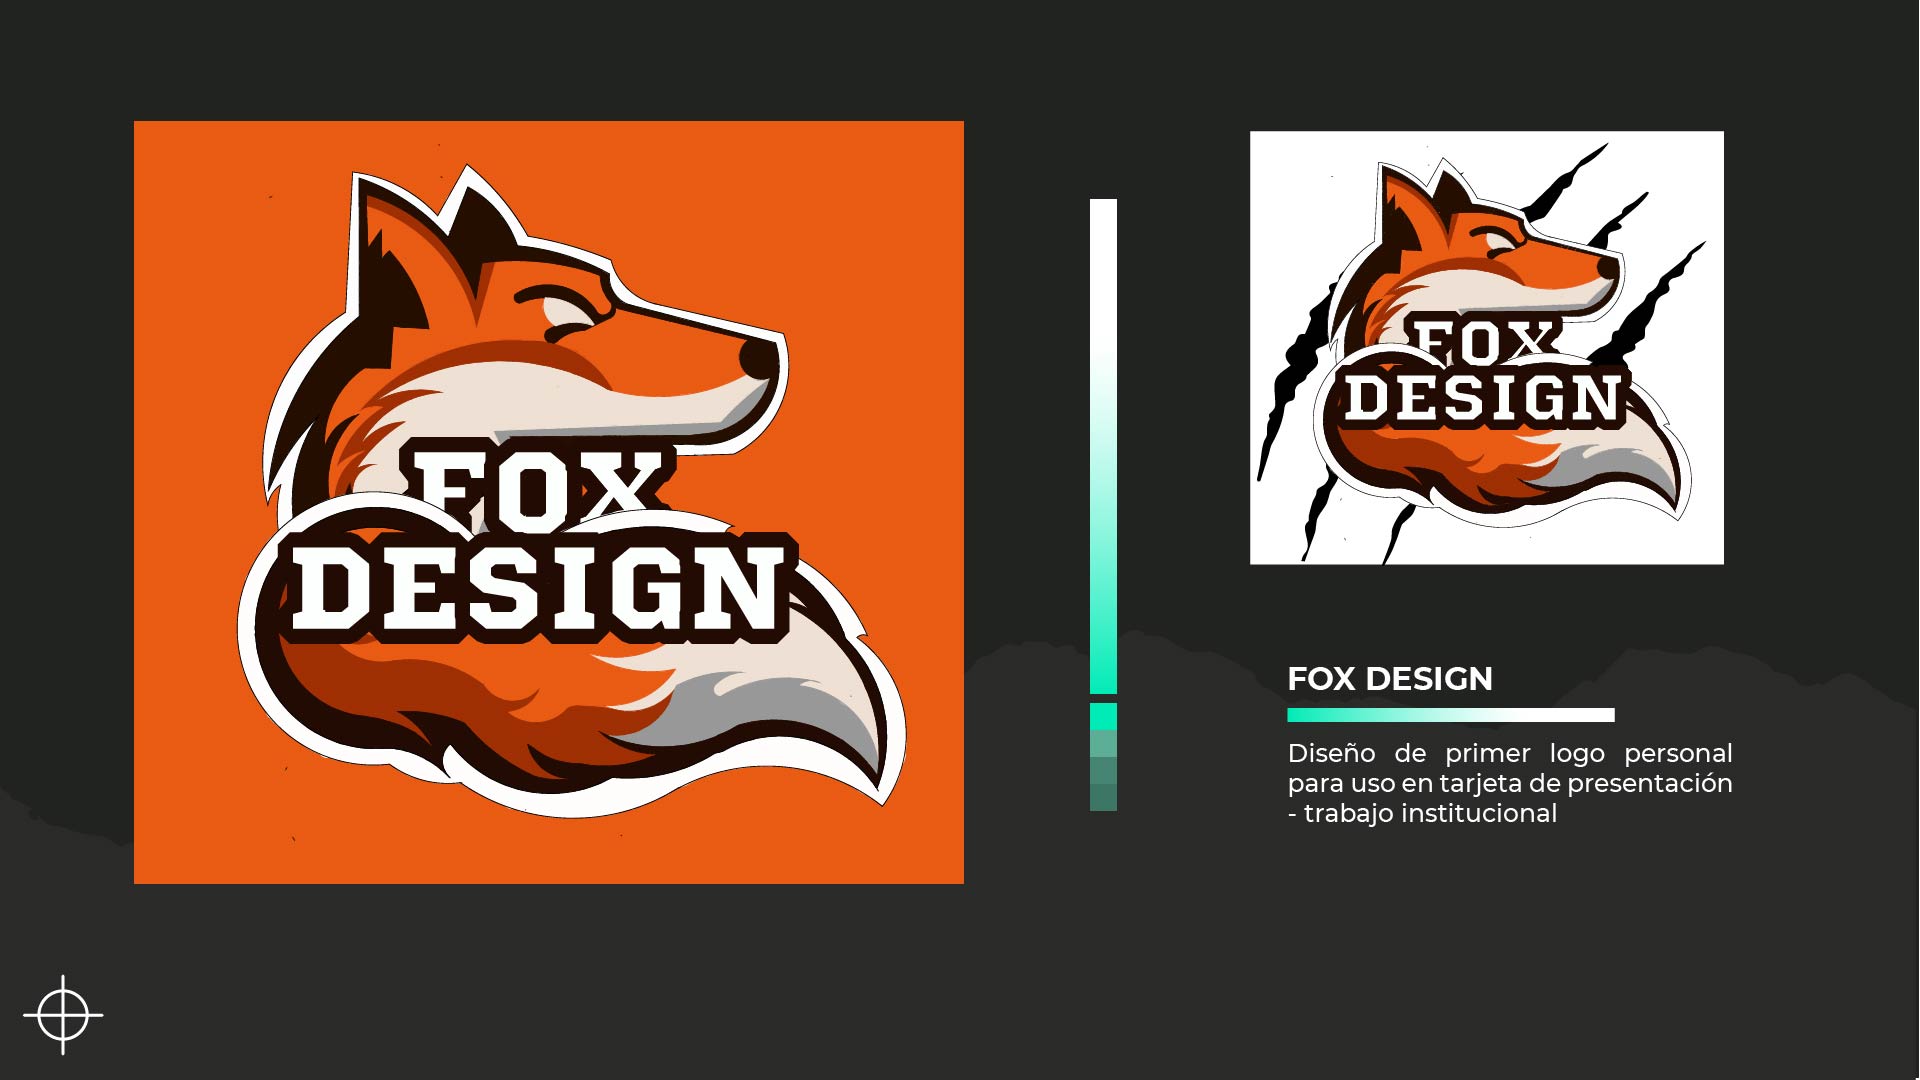 FOX DESIGN

Diseno de primer logo personal
para uso en tarjeta de presentacion
- trabajo institucional